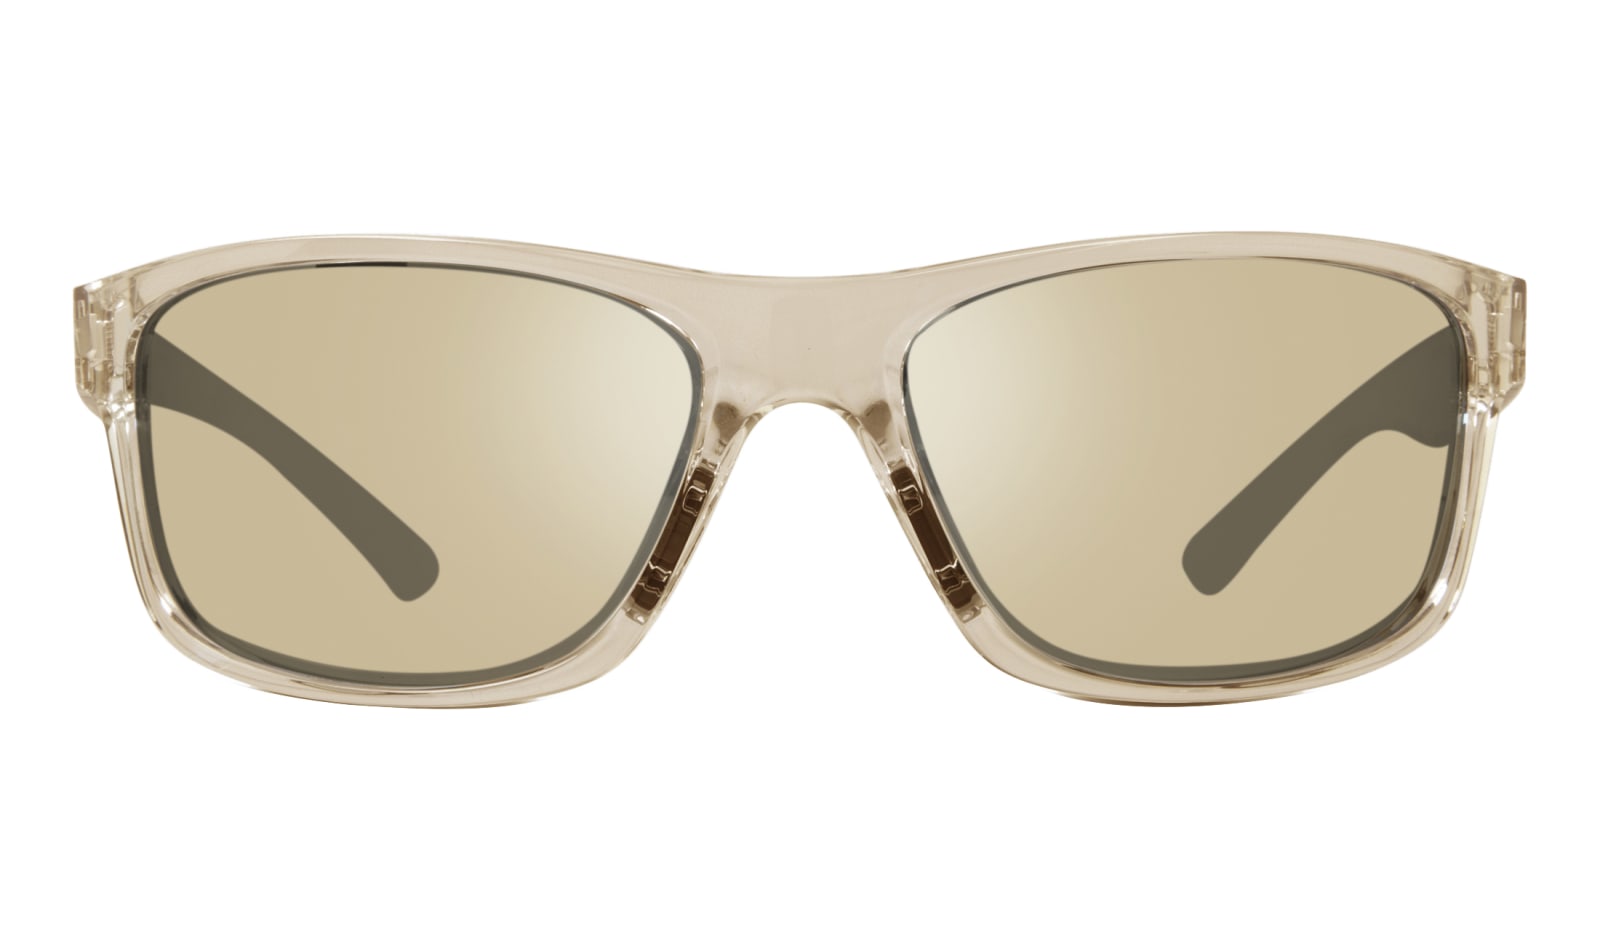 Revo Harness Sunglasses - SafetyGearPro.com - #1 Online Safety ...